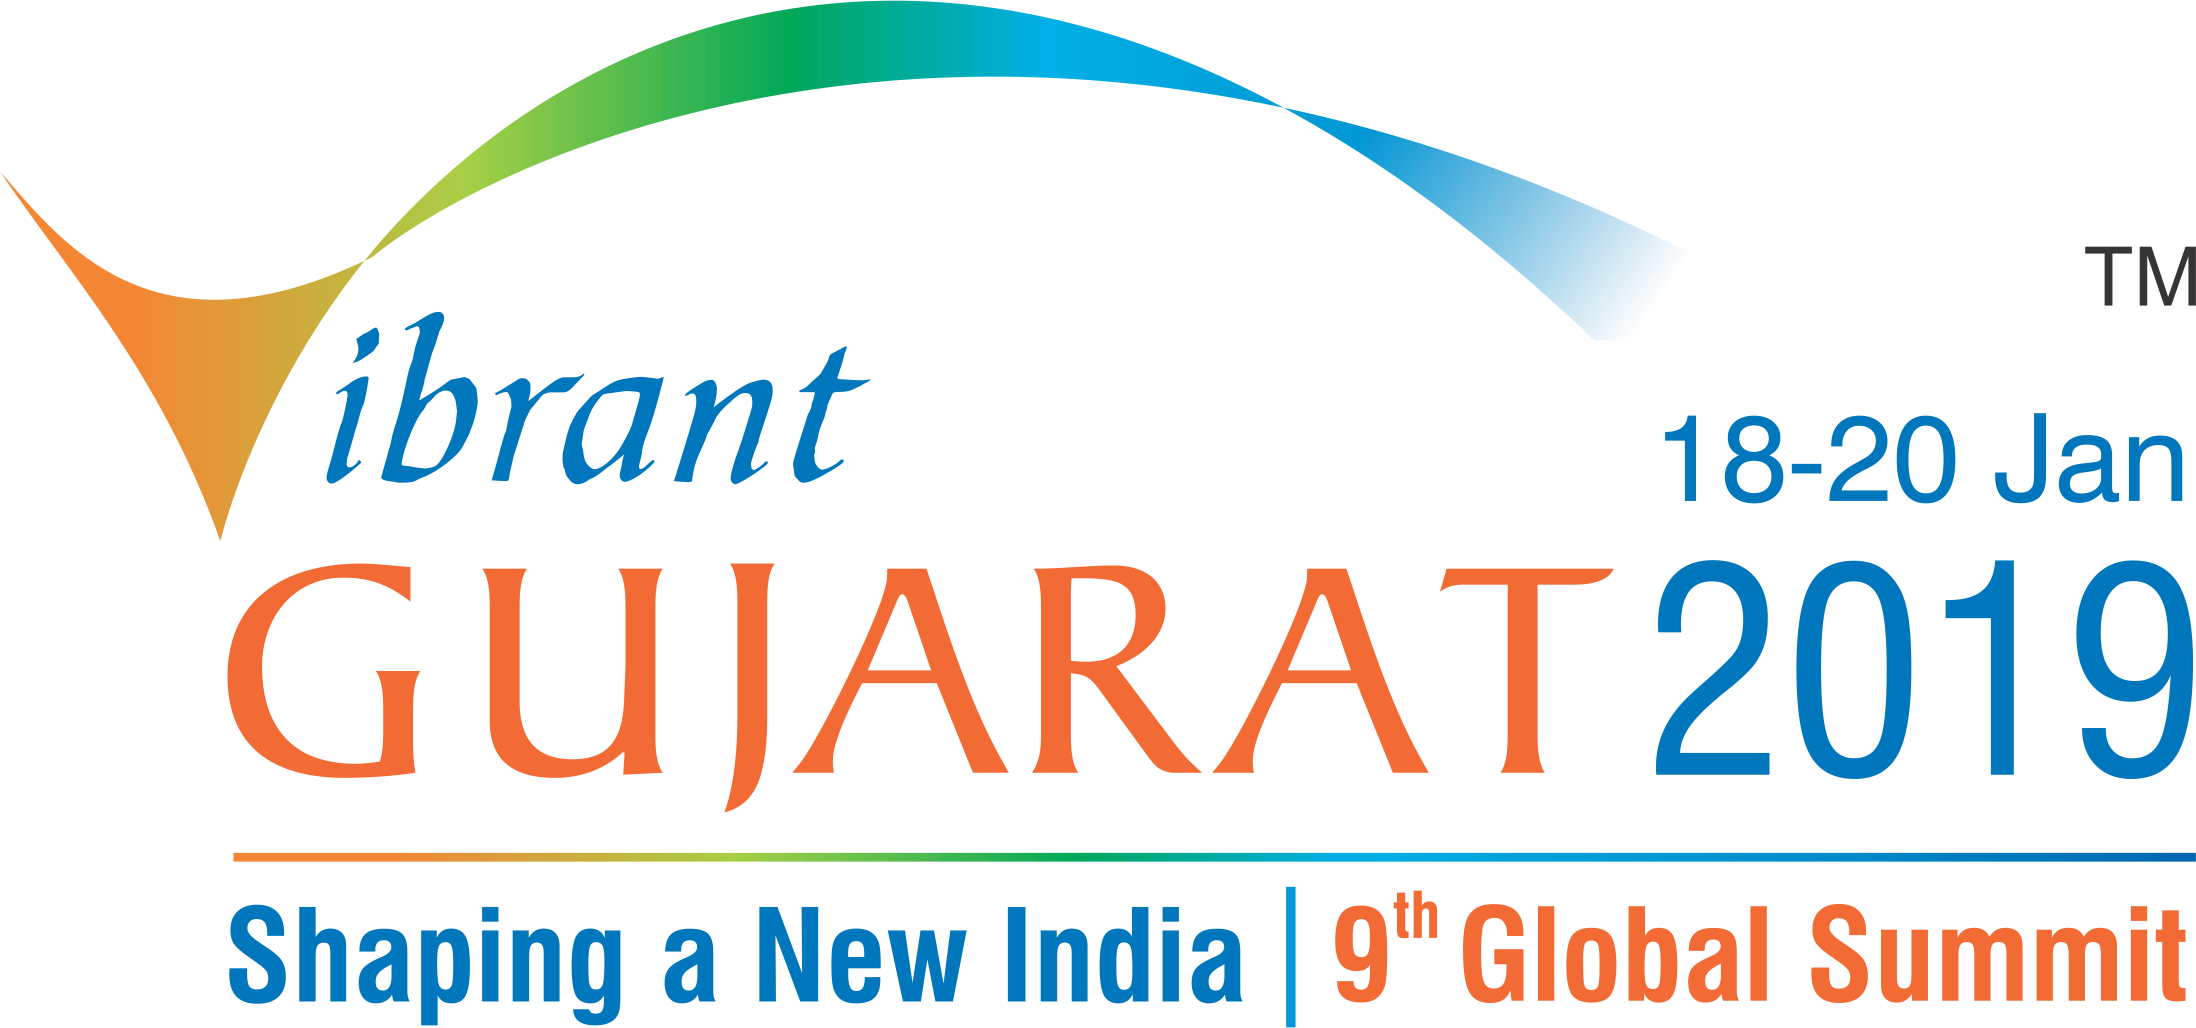 Vibrant Gujarat Global Summit 2019 (source: vibrantgujarat.com)